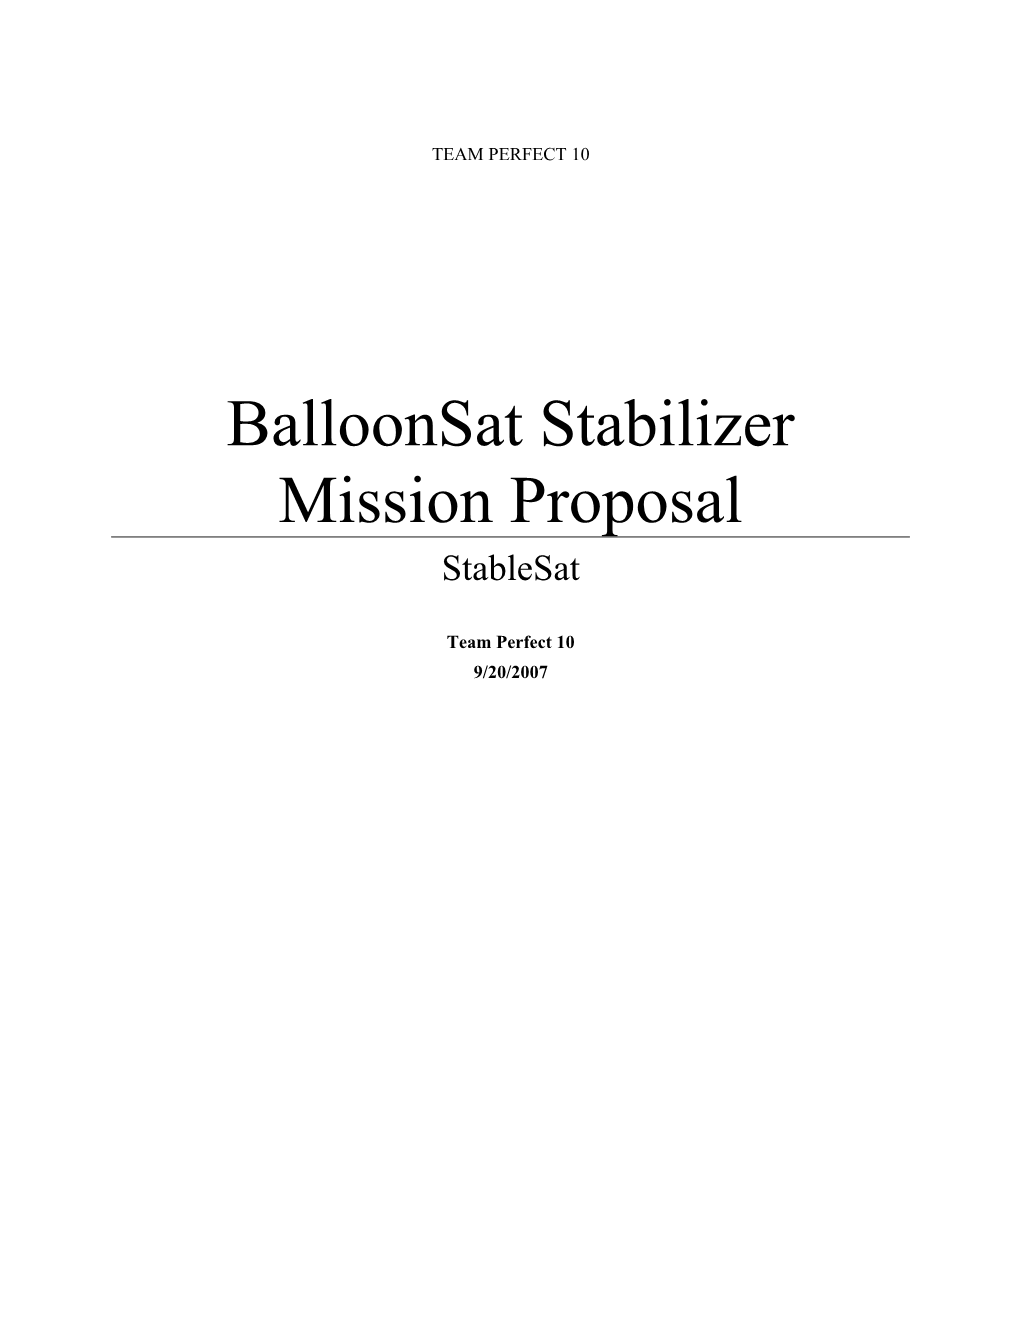 Balloonsat Stabilizer Mission Proposal